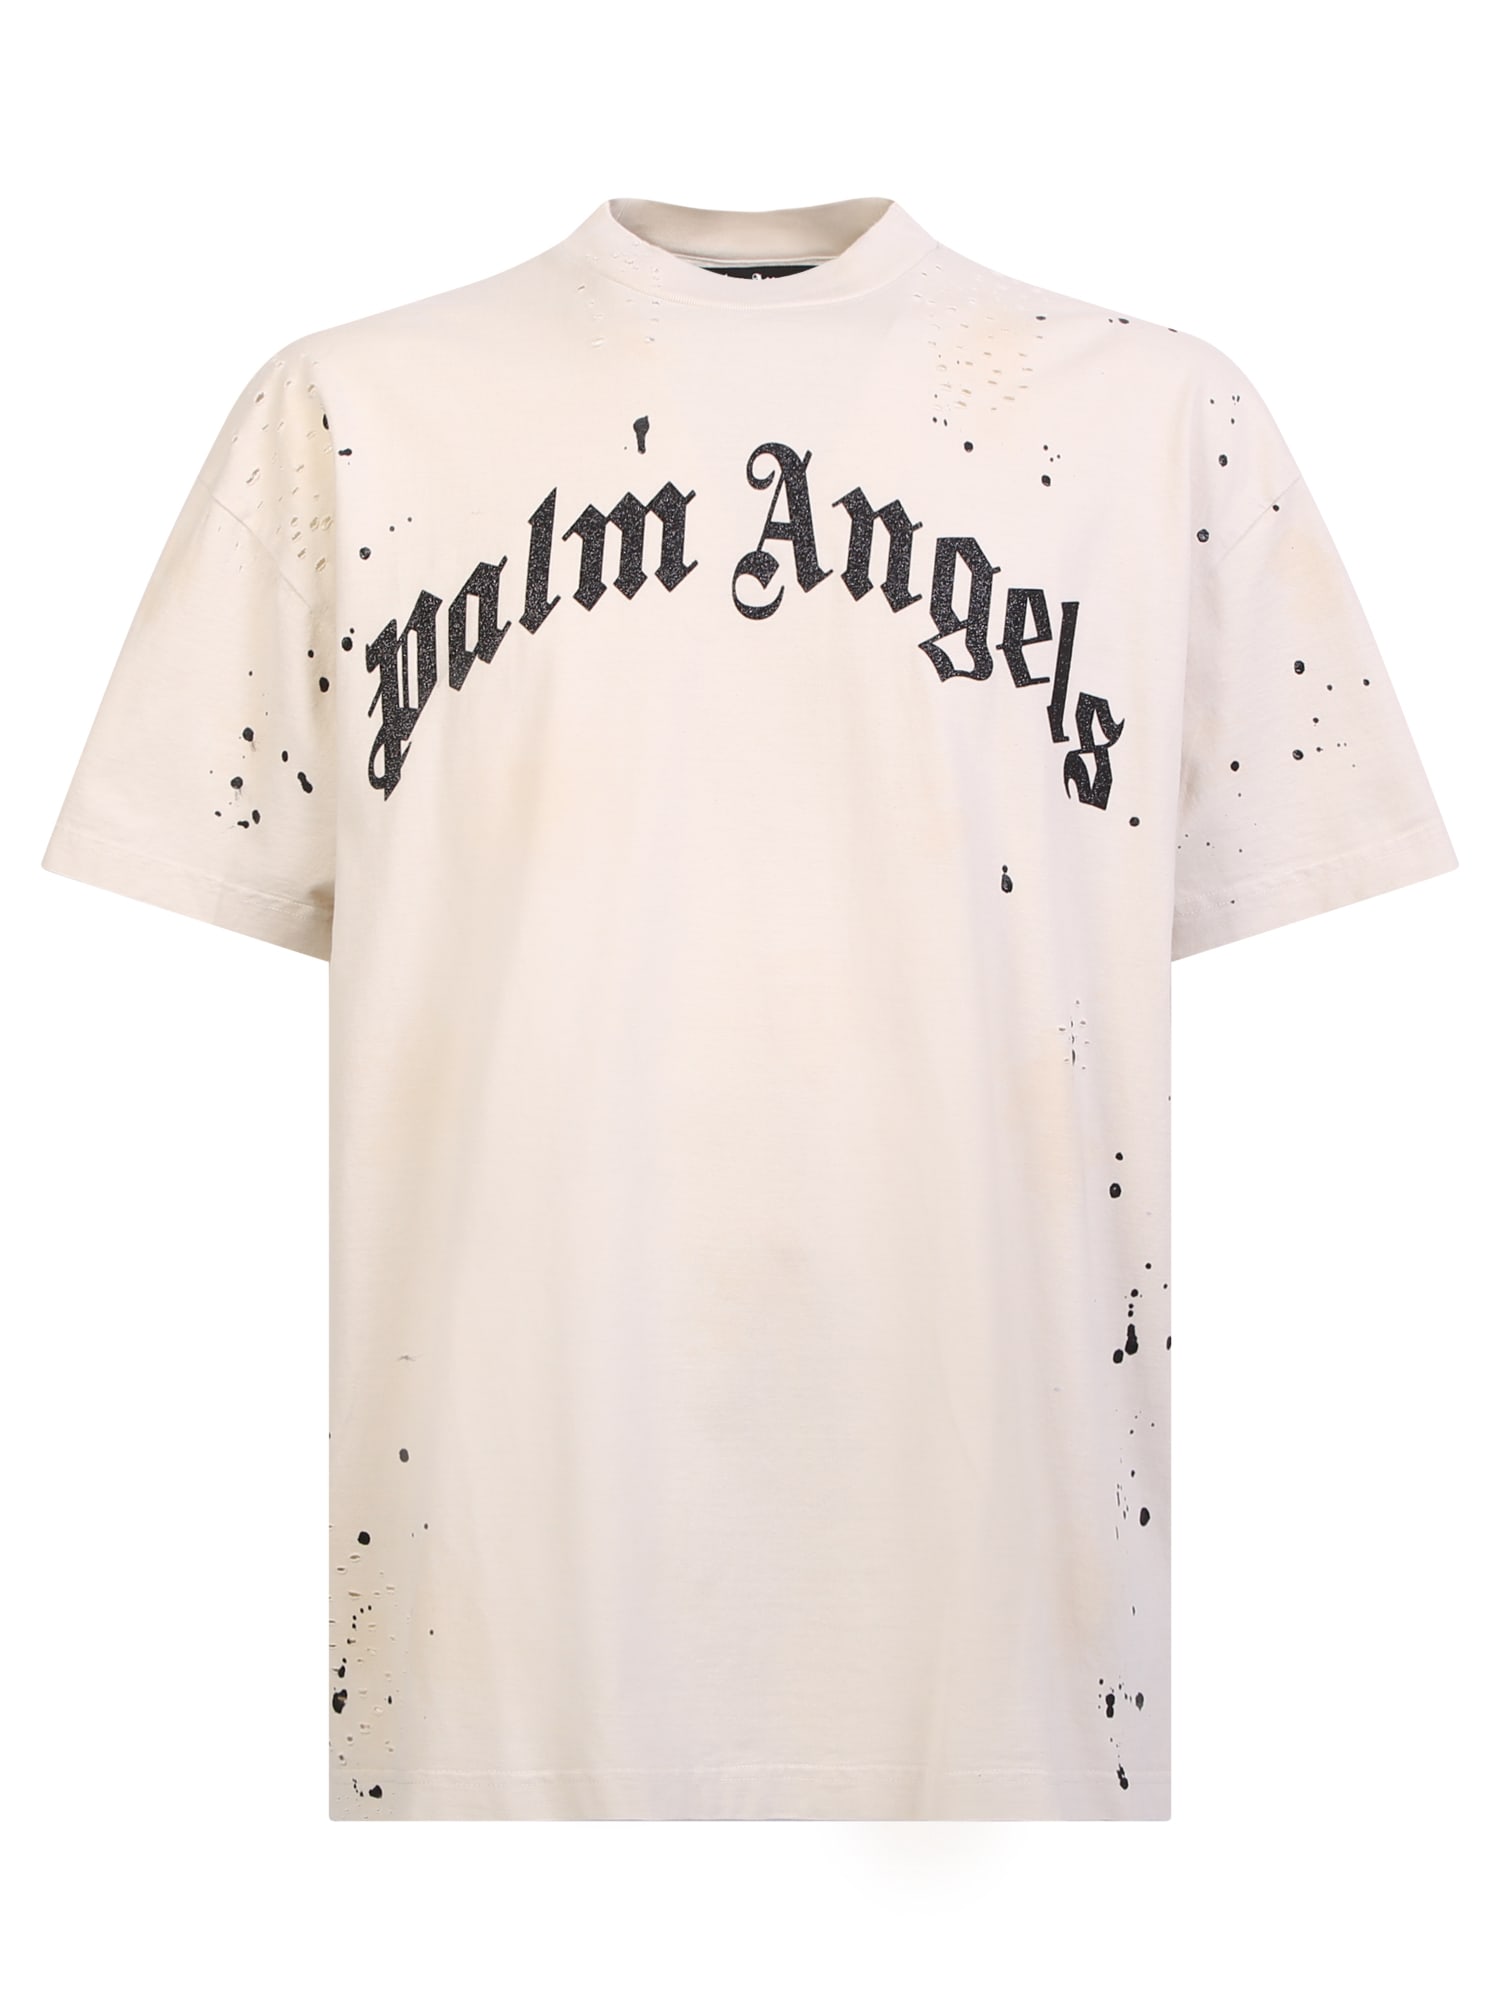 Palm Angels T-shirt White/black